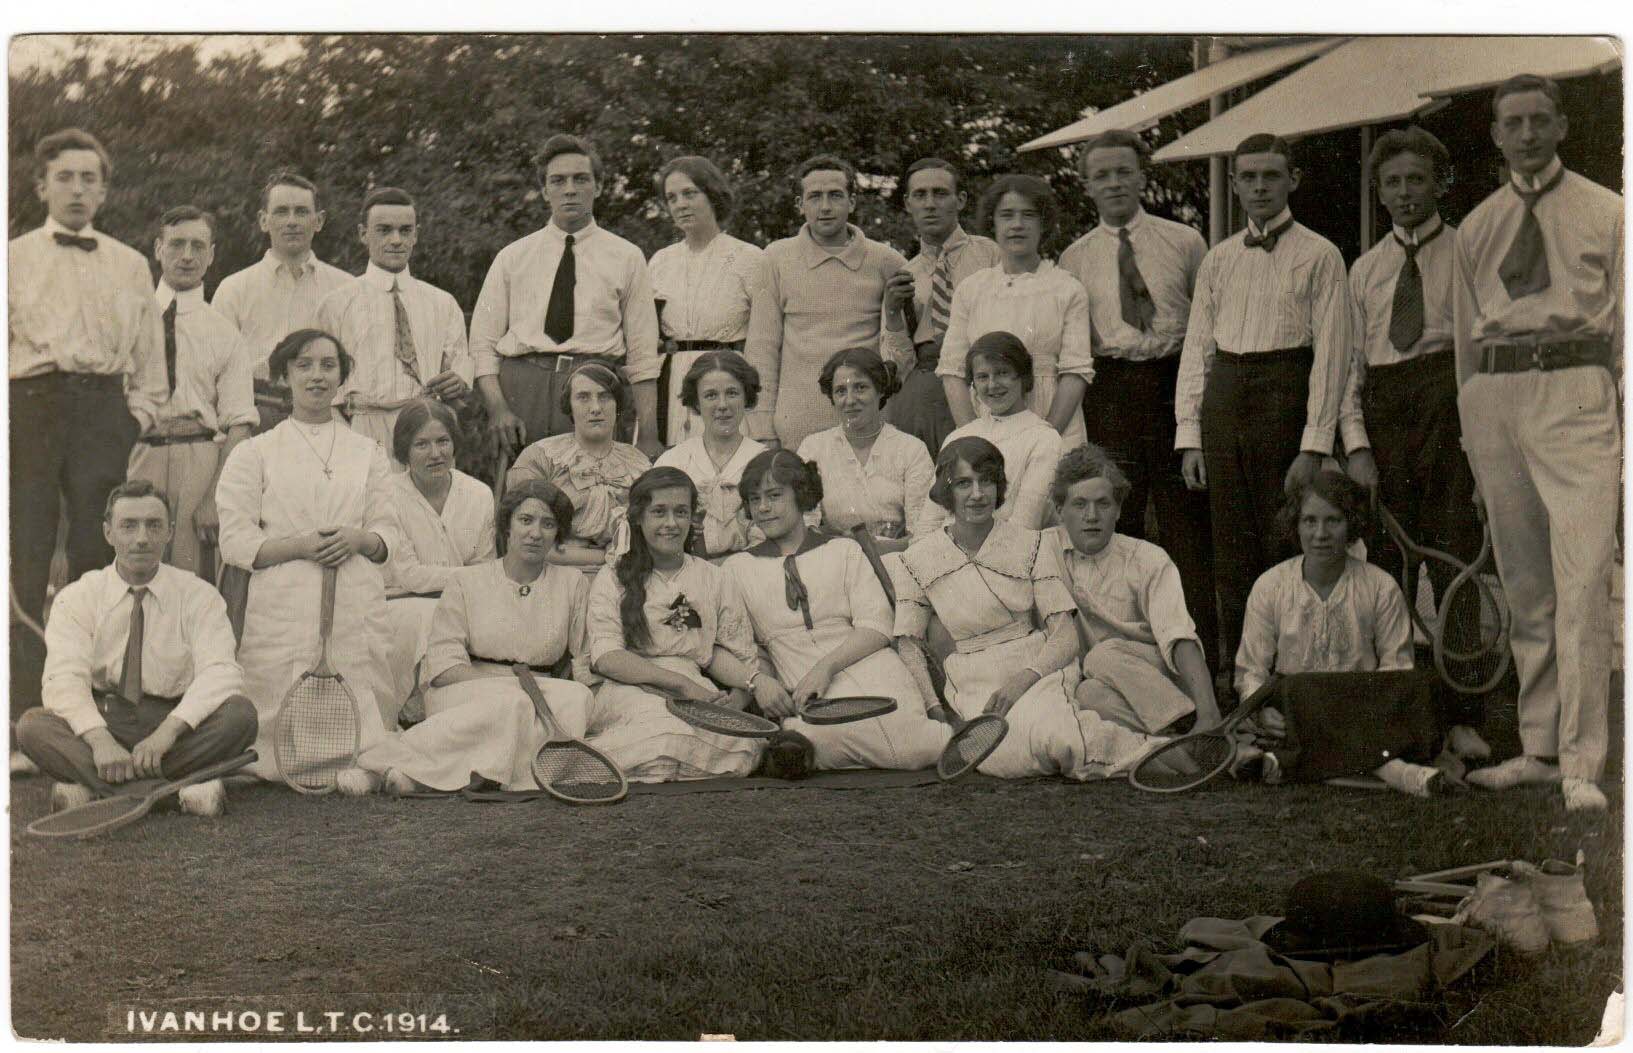 Ivanhoe Lawn Tennis Club 1914